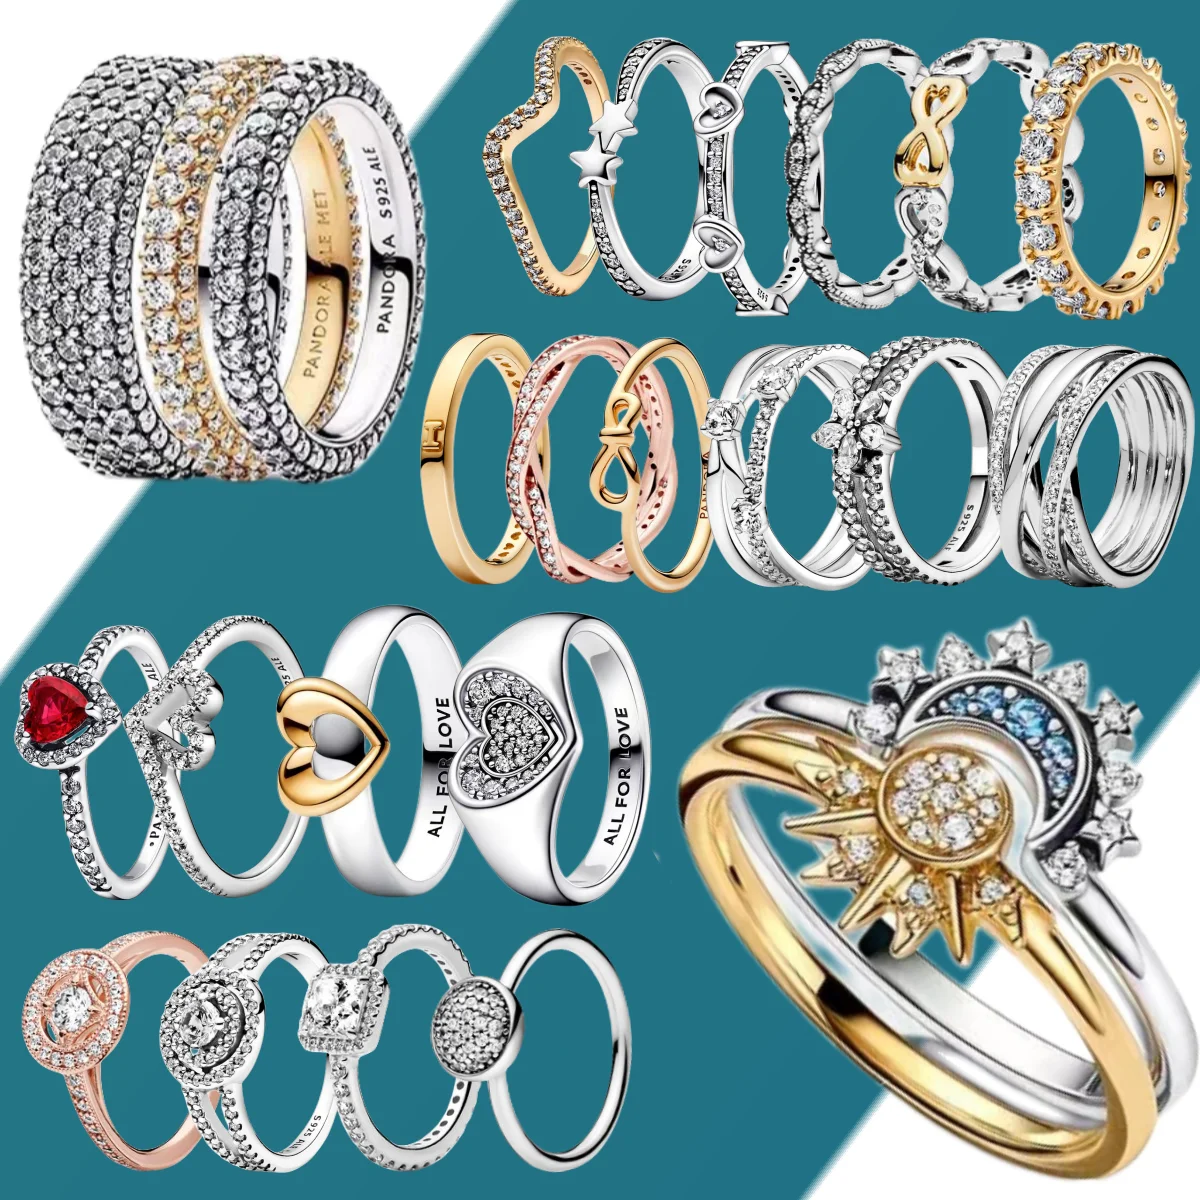 

Bestselling New Women's 925 Silver Jewelry Original Pandora DIY Accessories Female Designer Charming Crown Ring Wearing Charming